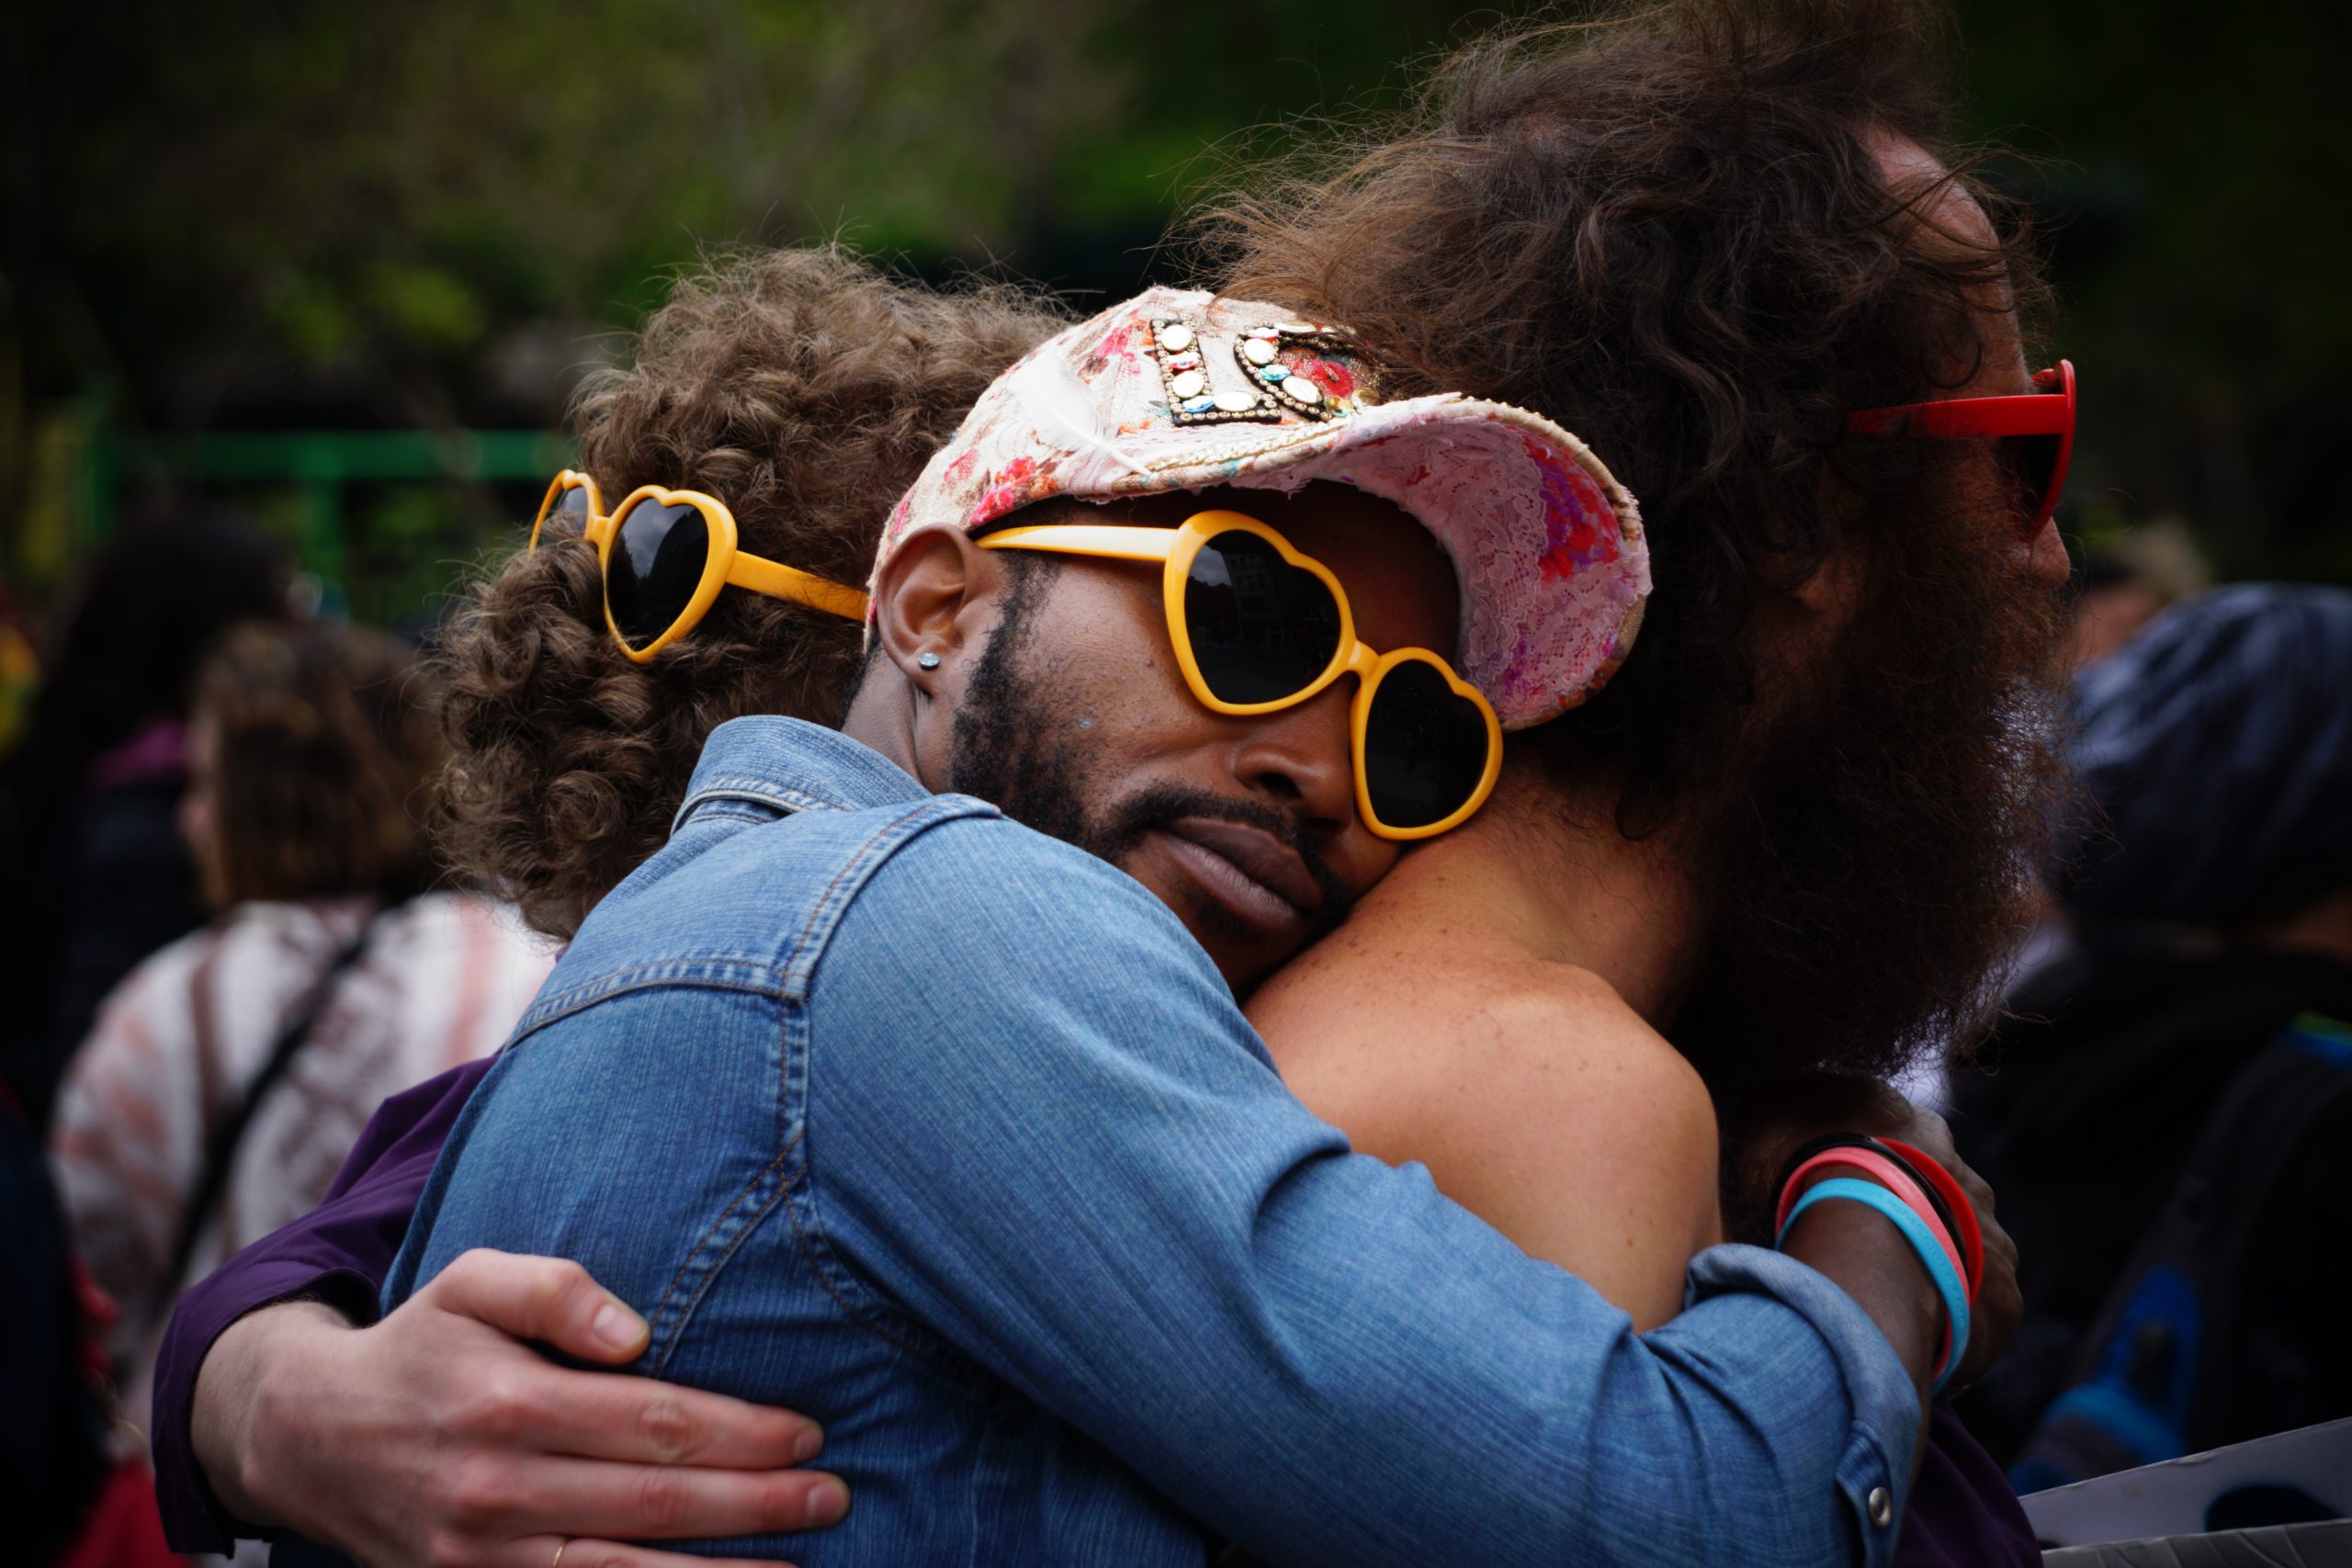 Guys hugging at festival